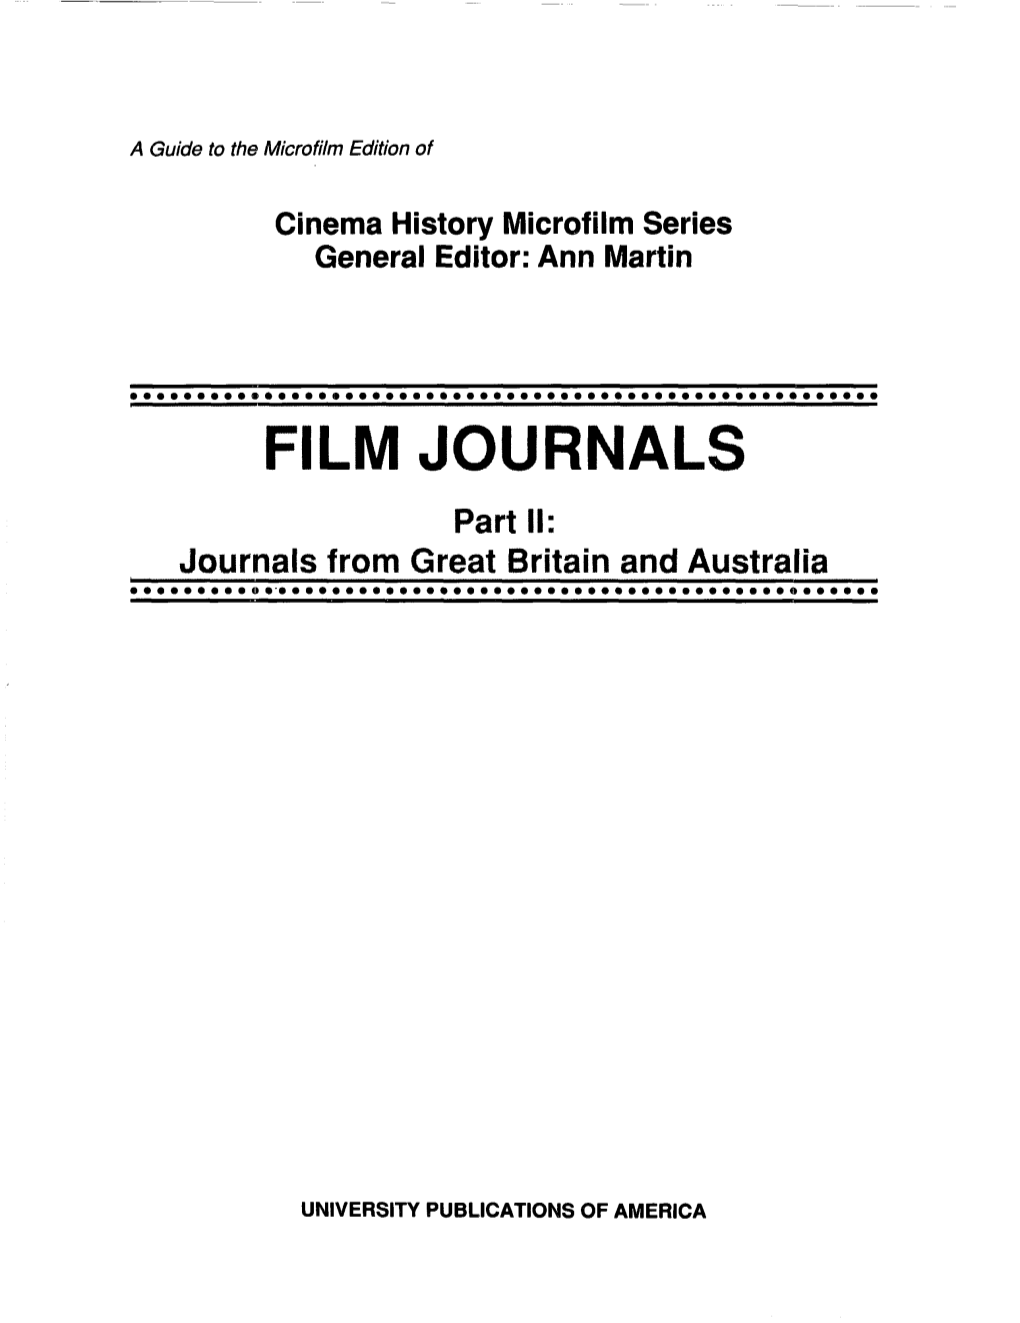 FILM JOURNALS Part II: Journals from Great Britain and Australia